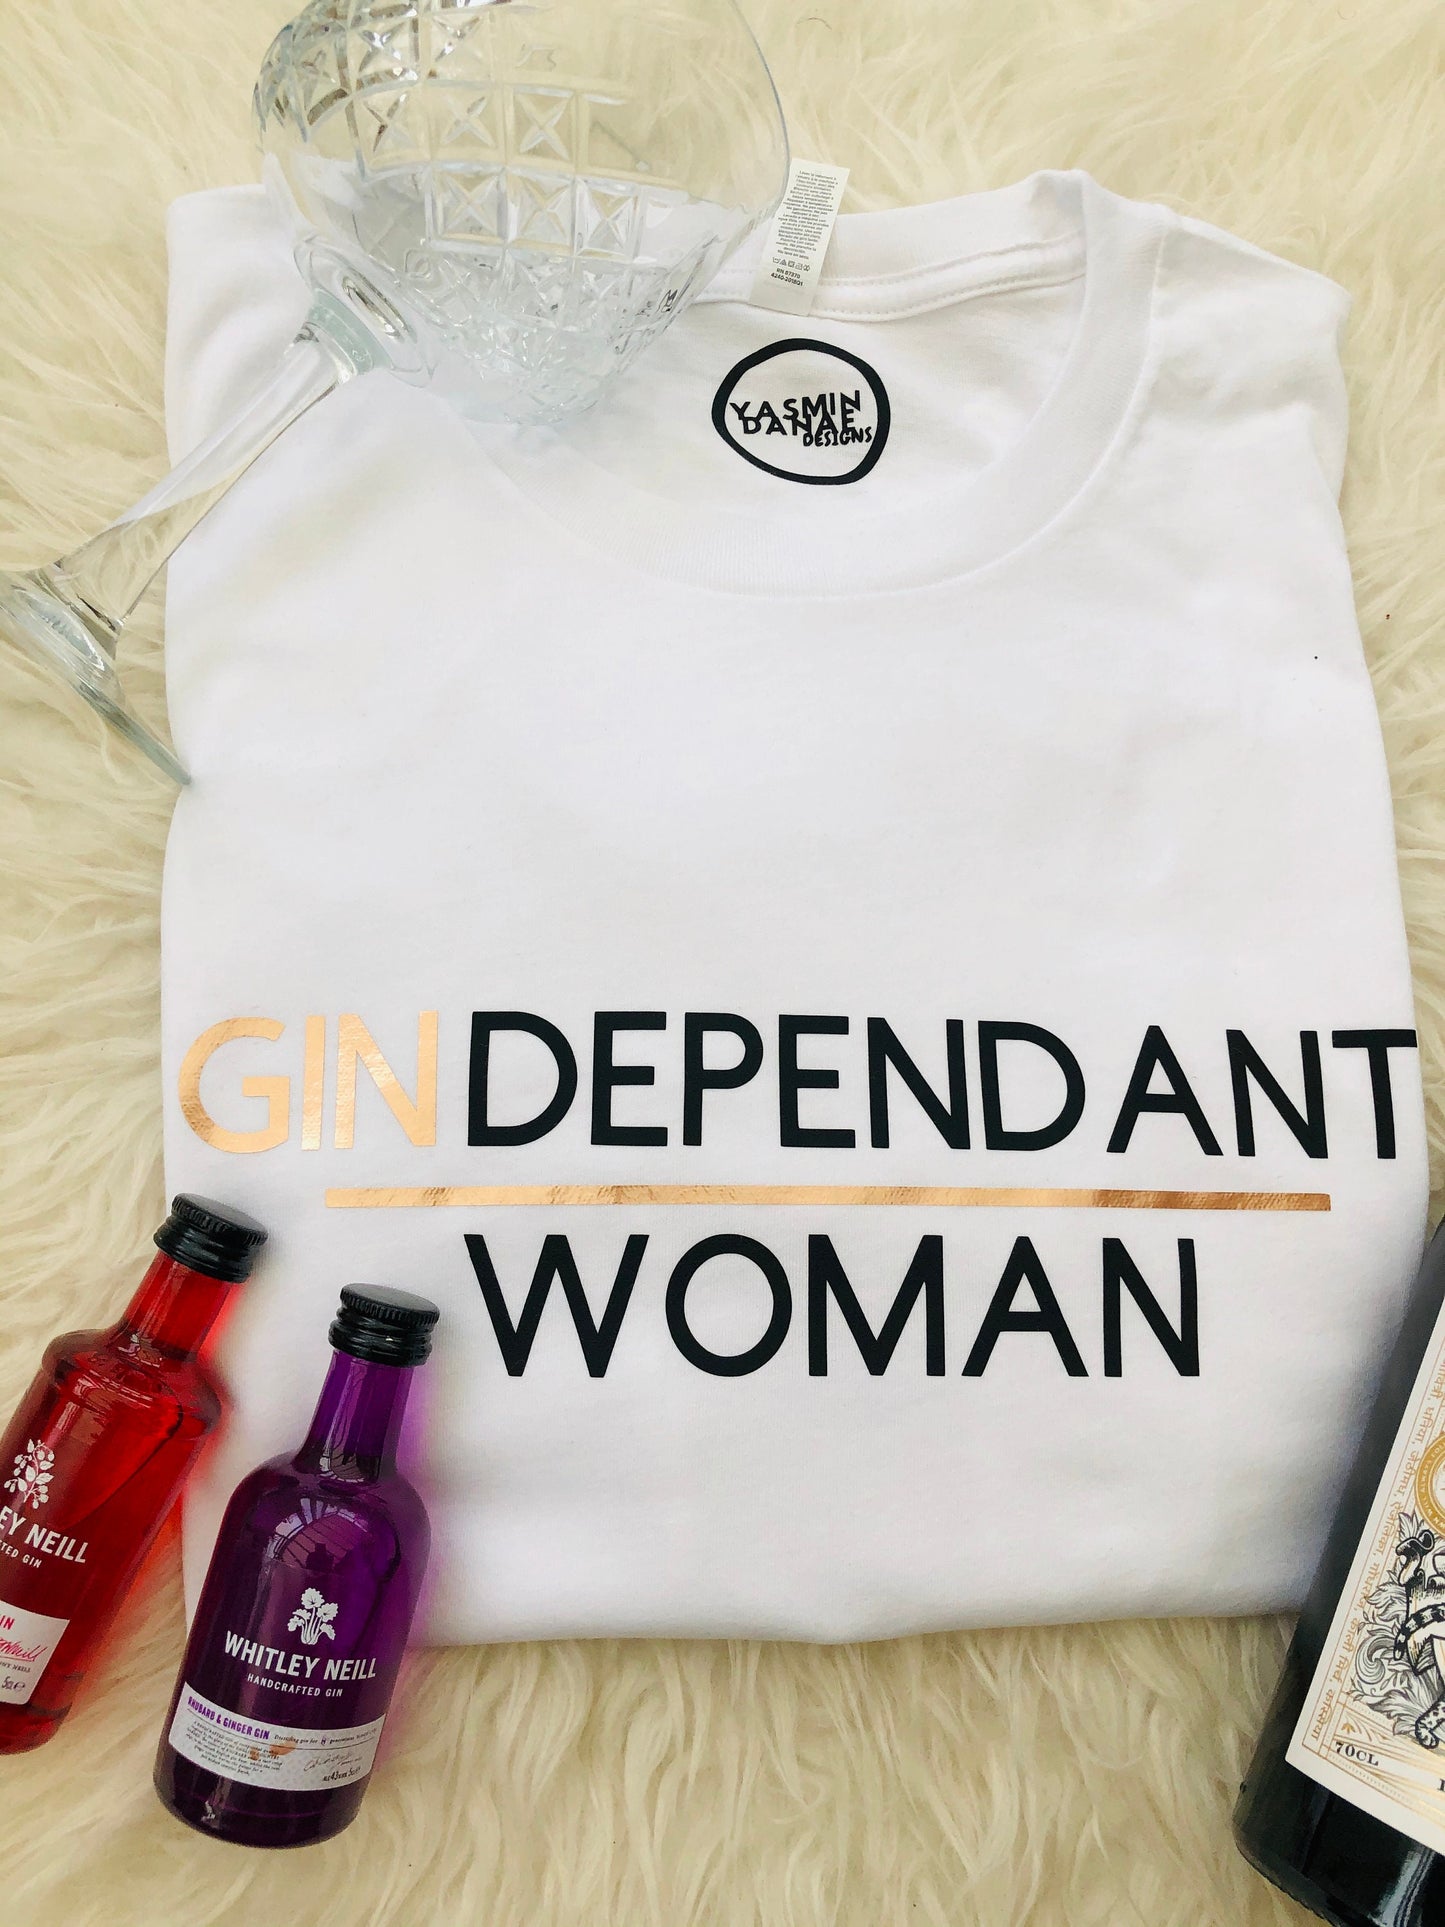 GINdependant Woman Slogan T-shirt